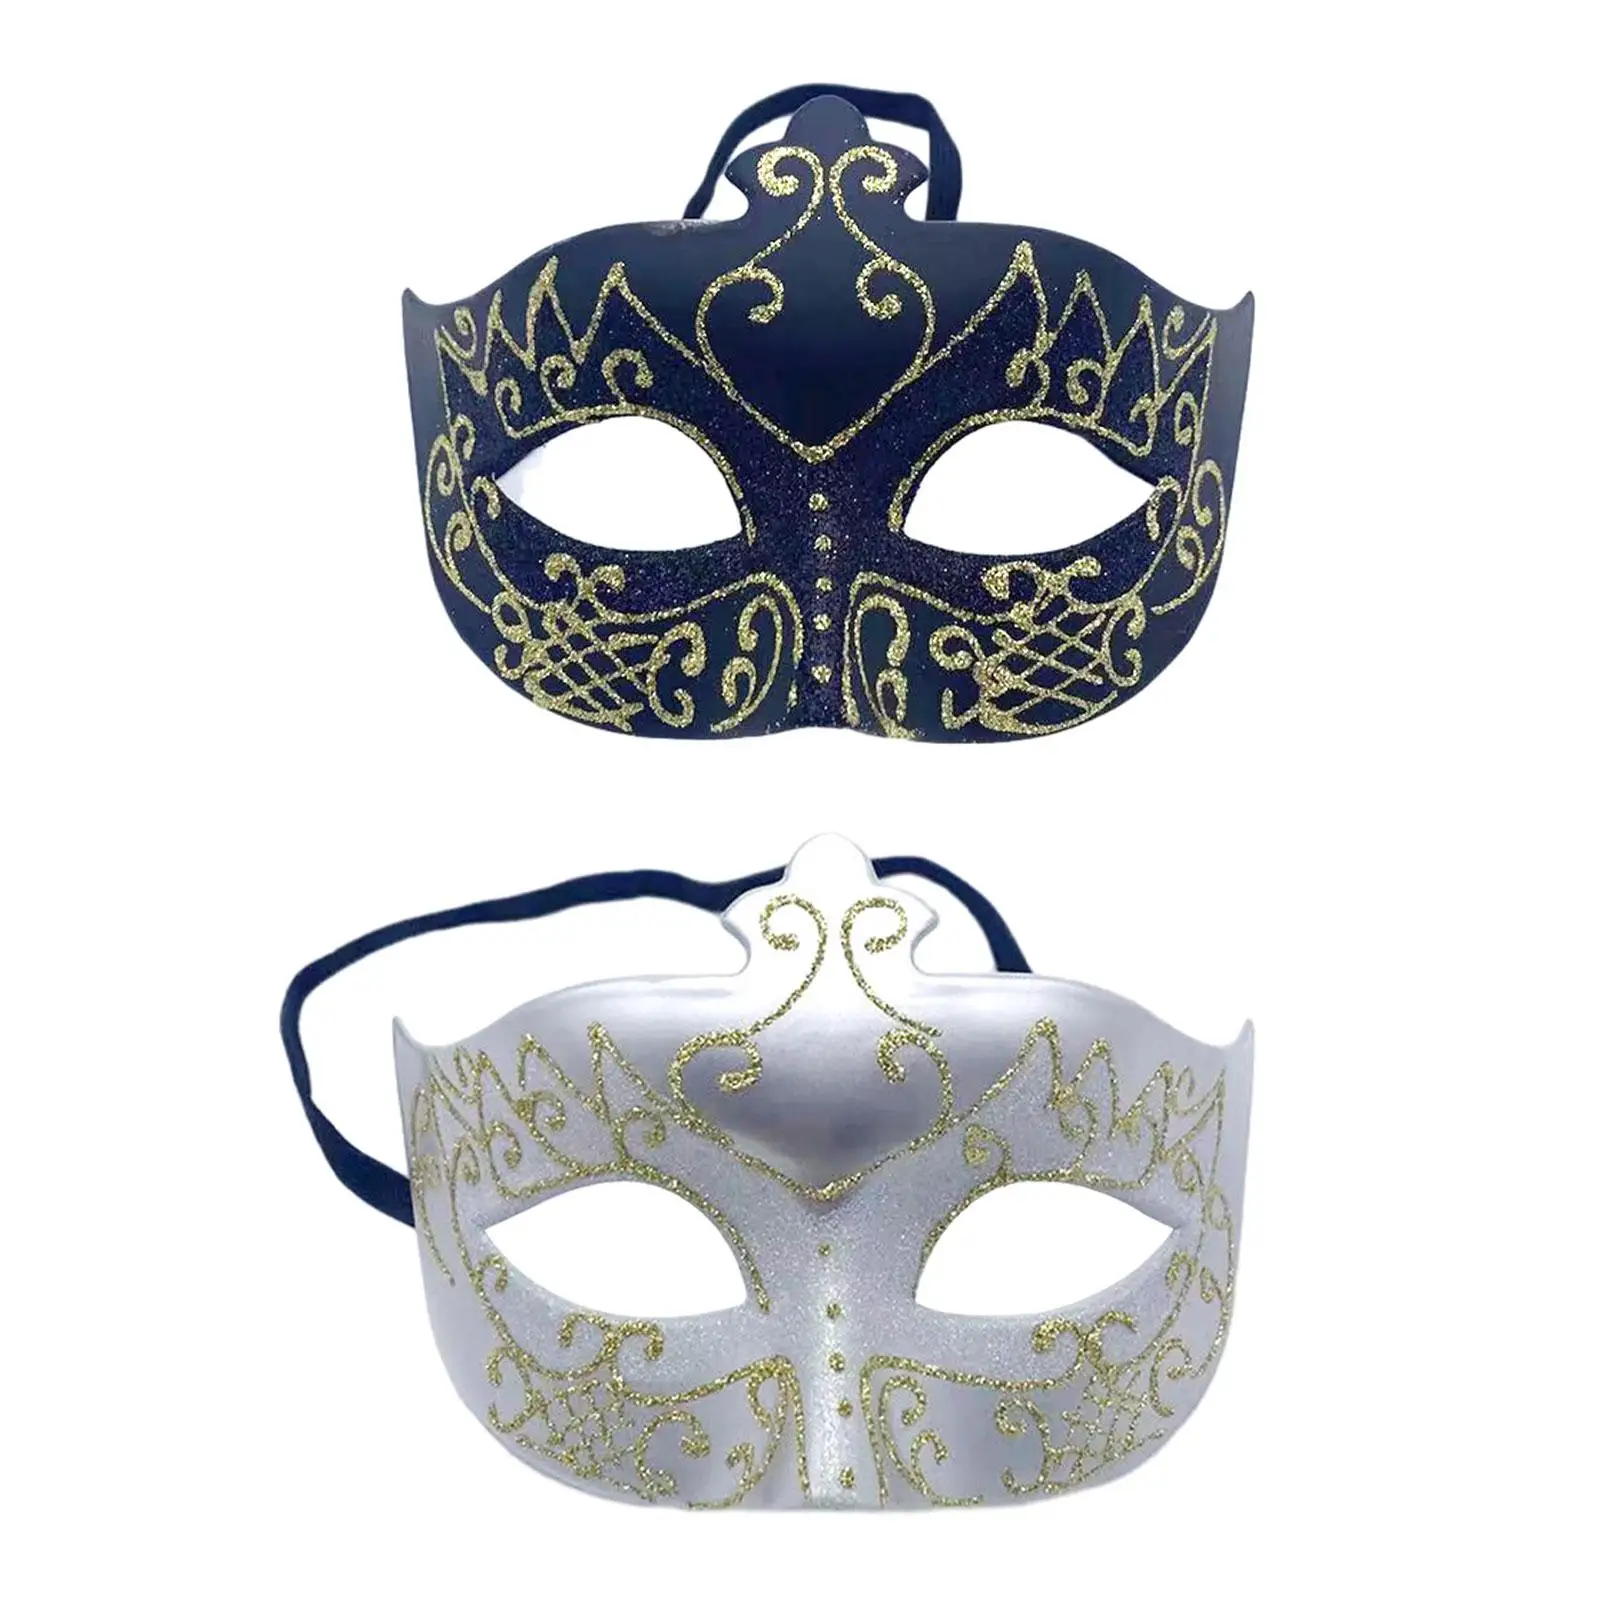 Men's Long Ornate Masquerade Mask | Differio